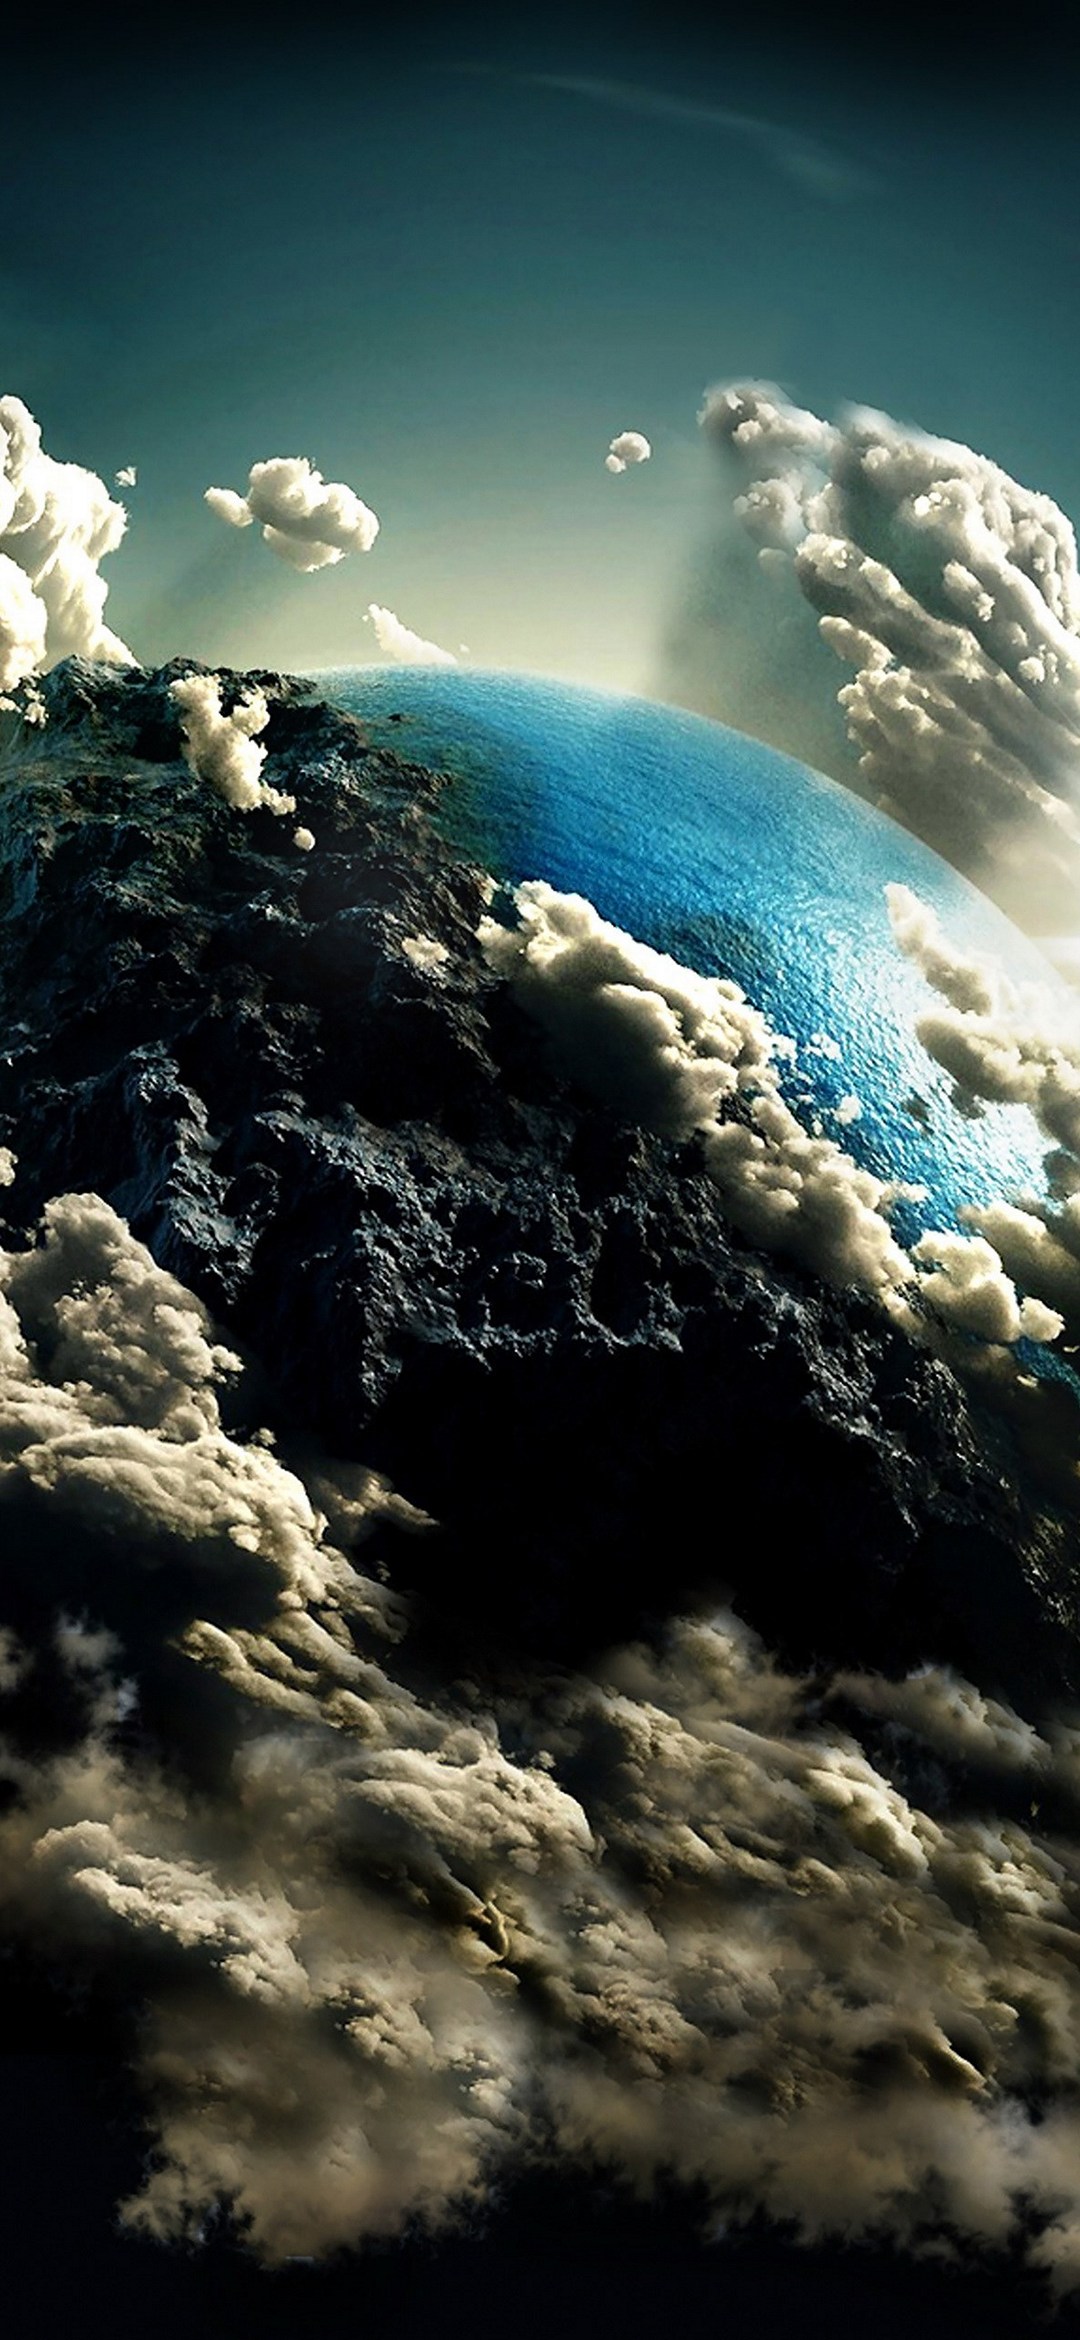 Earth Close Up Sea Of Clouds Redmagic 5 Android スマホ壁紙 待ち受け スマラン